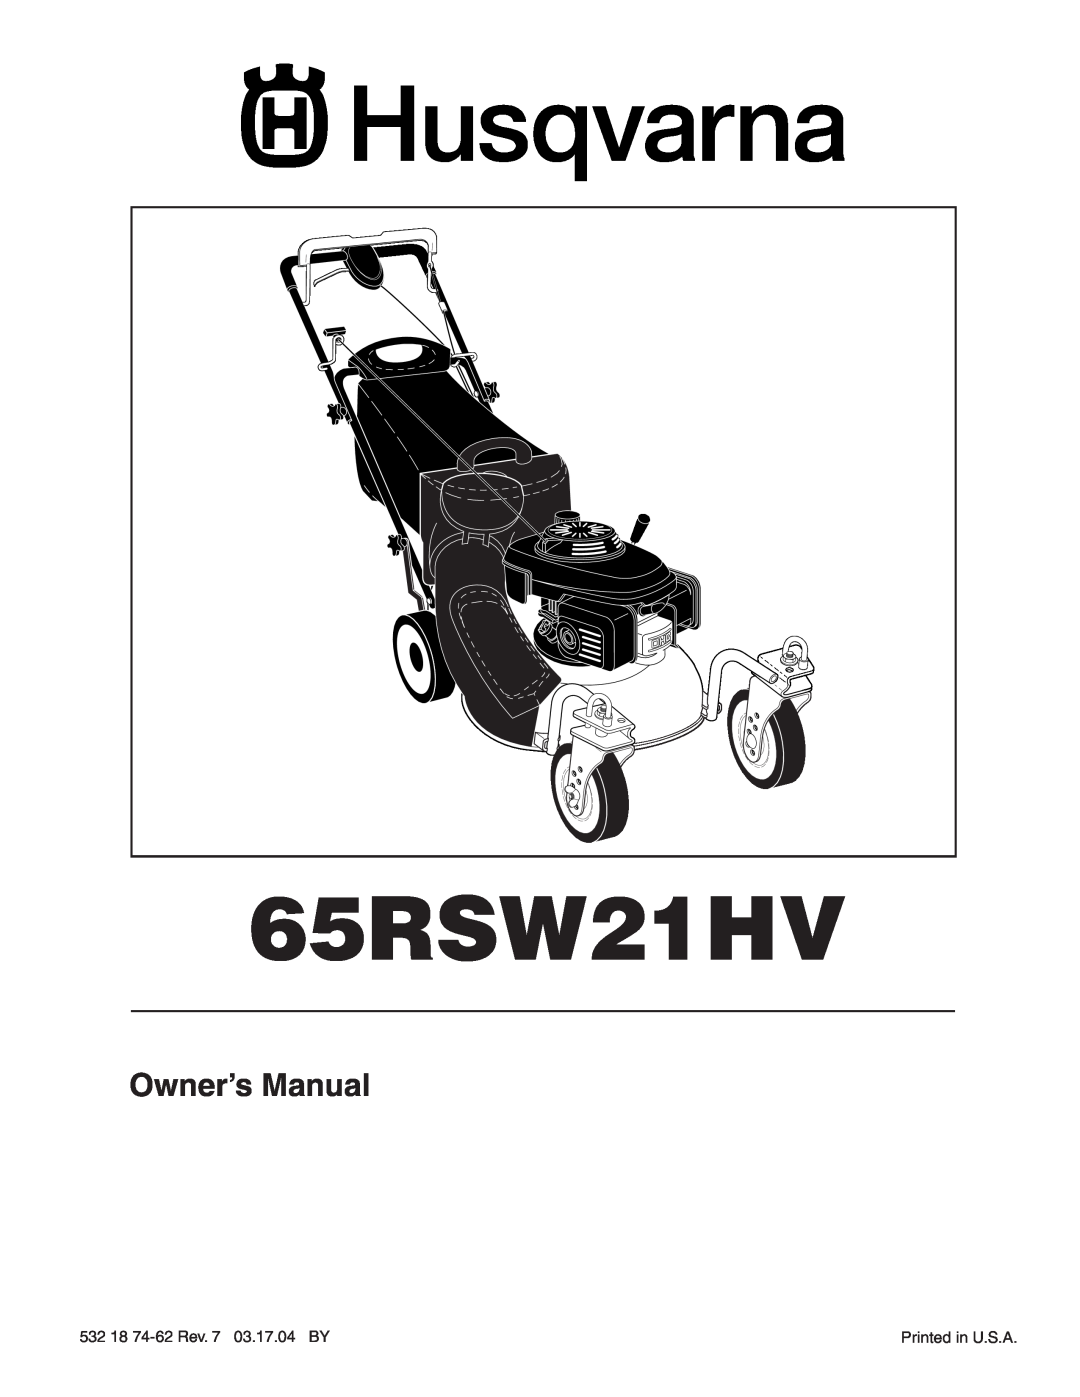 Husqvarna 65RSW21HV owner manual Owner’s Manual, 532 18 74-62Rev. 7 03.17.04 BY, Printed in U.S.A 